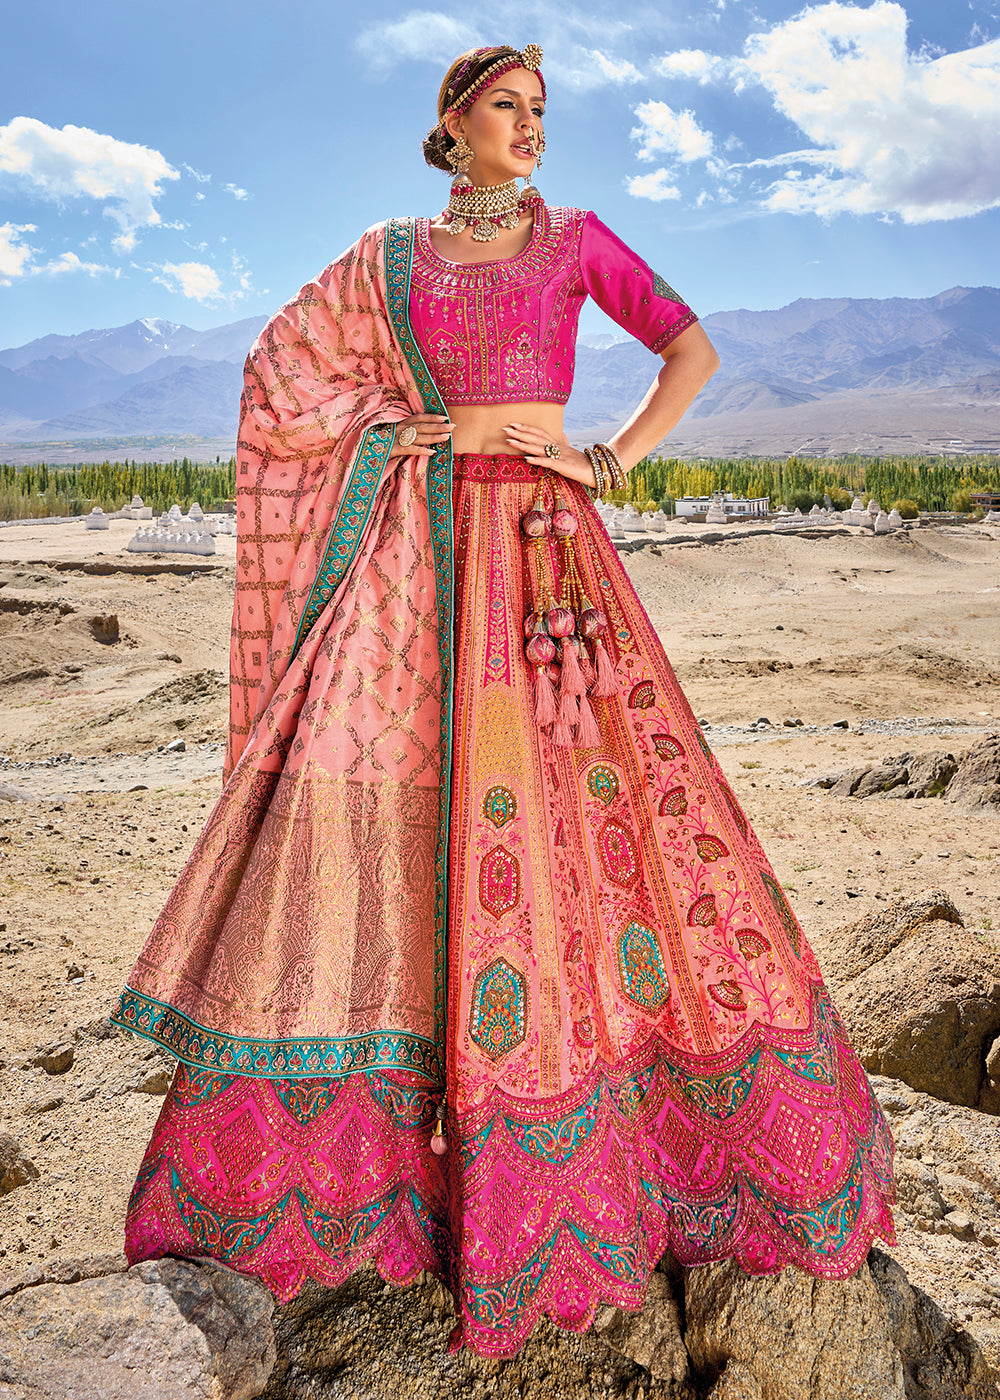 Buy Now Fuchsia Pink Designer Style Embroidered Traditional Lehenga Choli Online in USA, UK, Canada & Worldwide at Empress Clothing. 